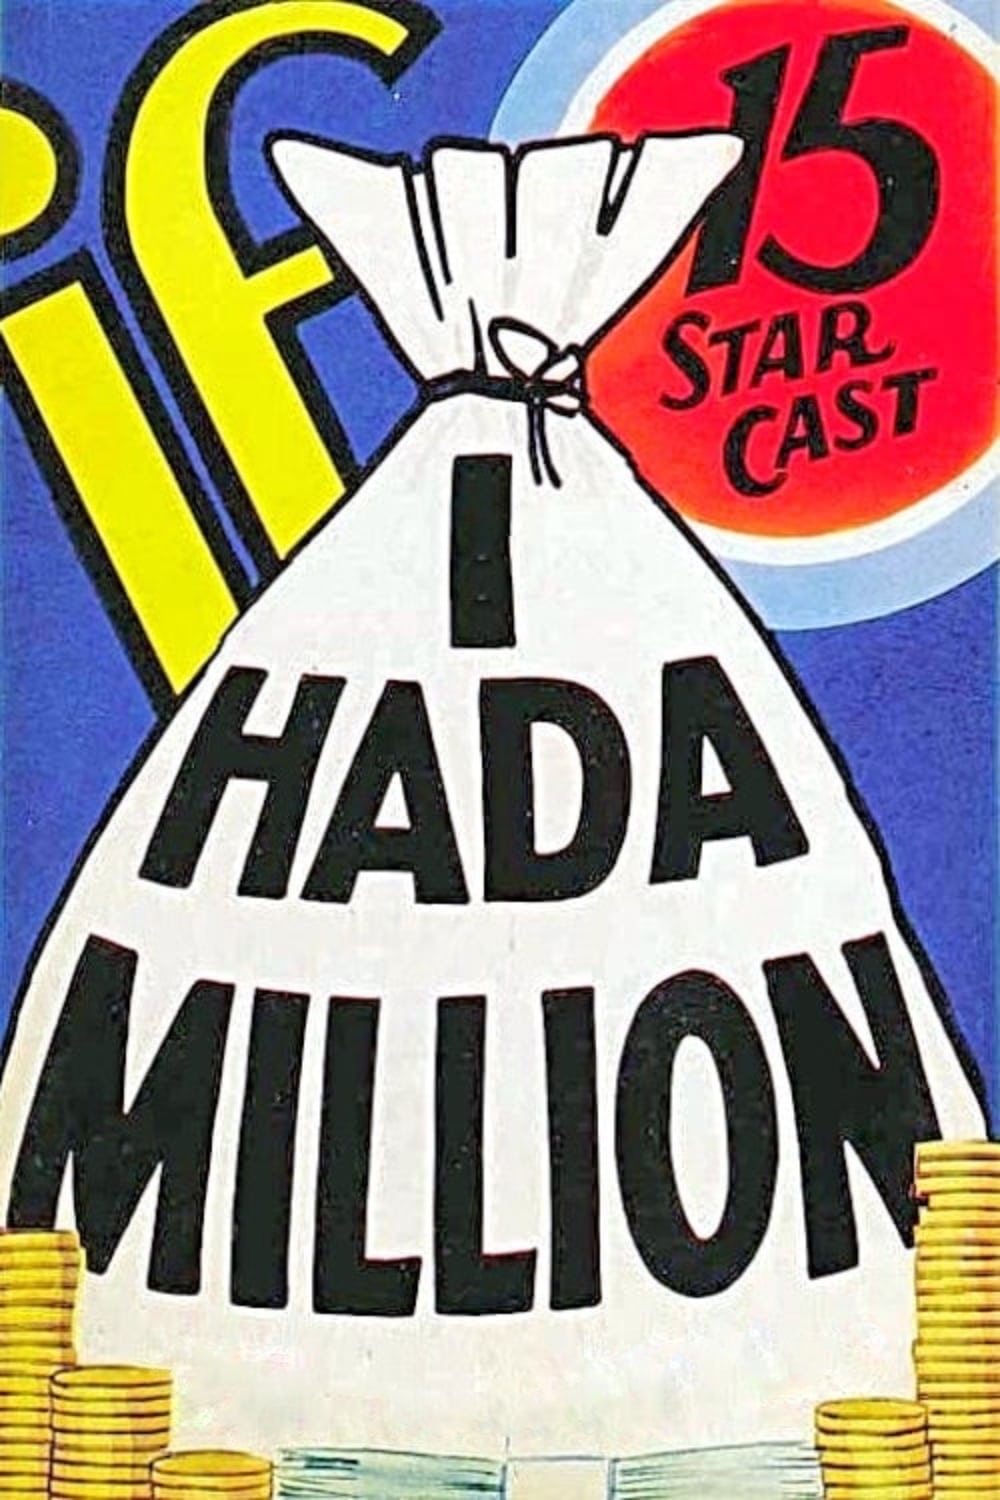 If I Had a Million (1932)